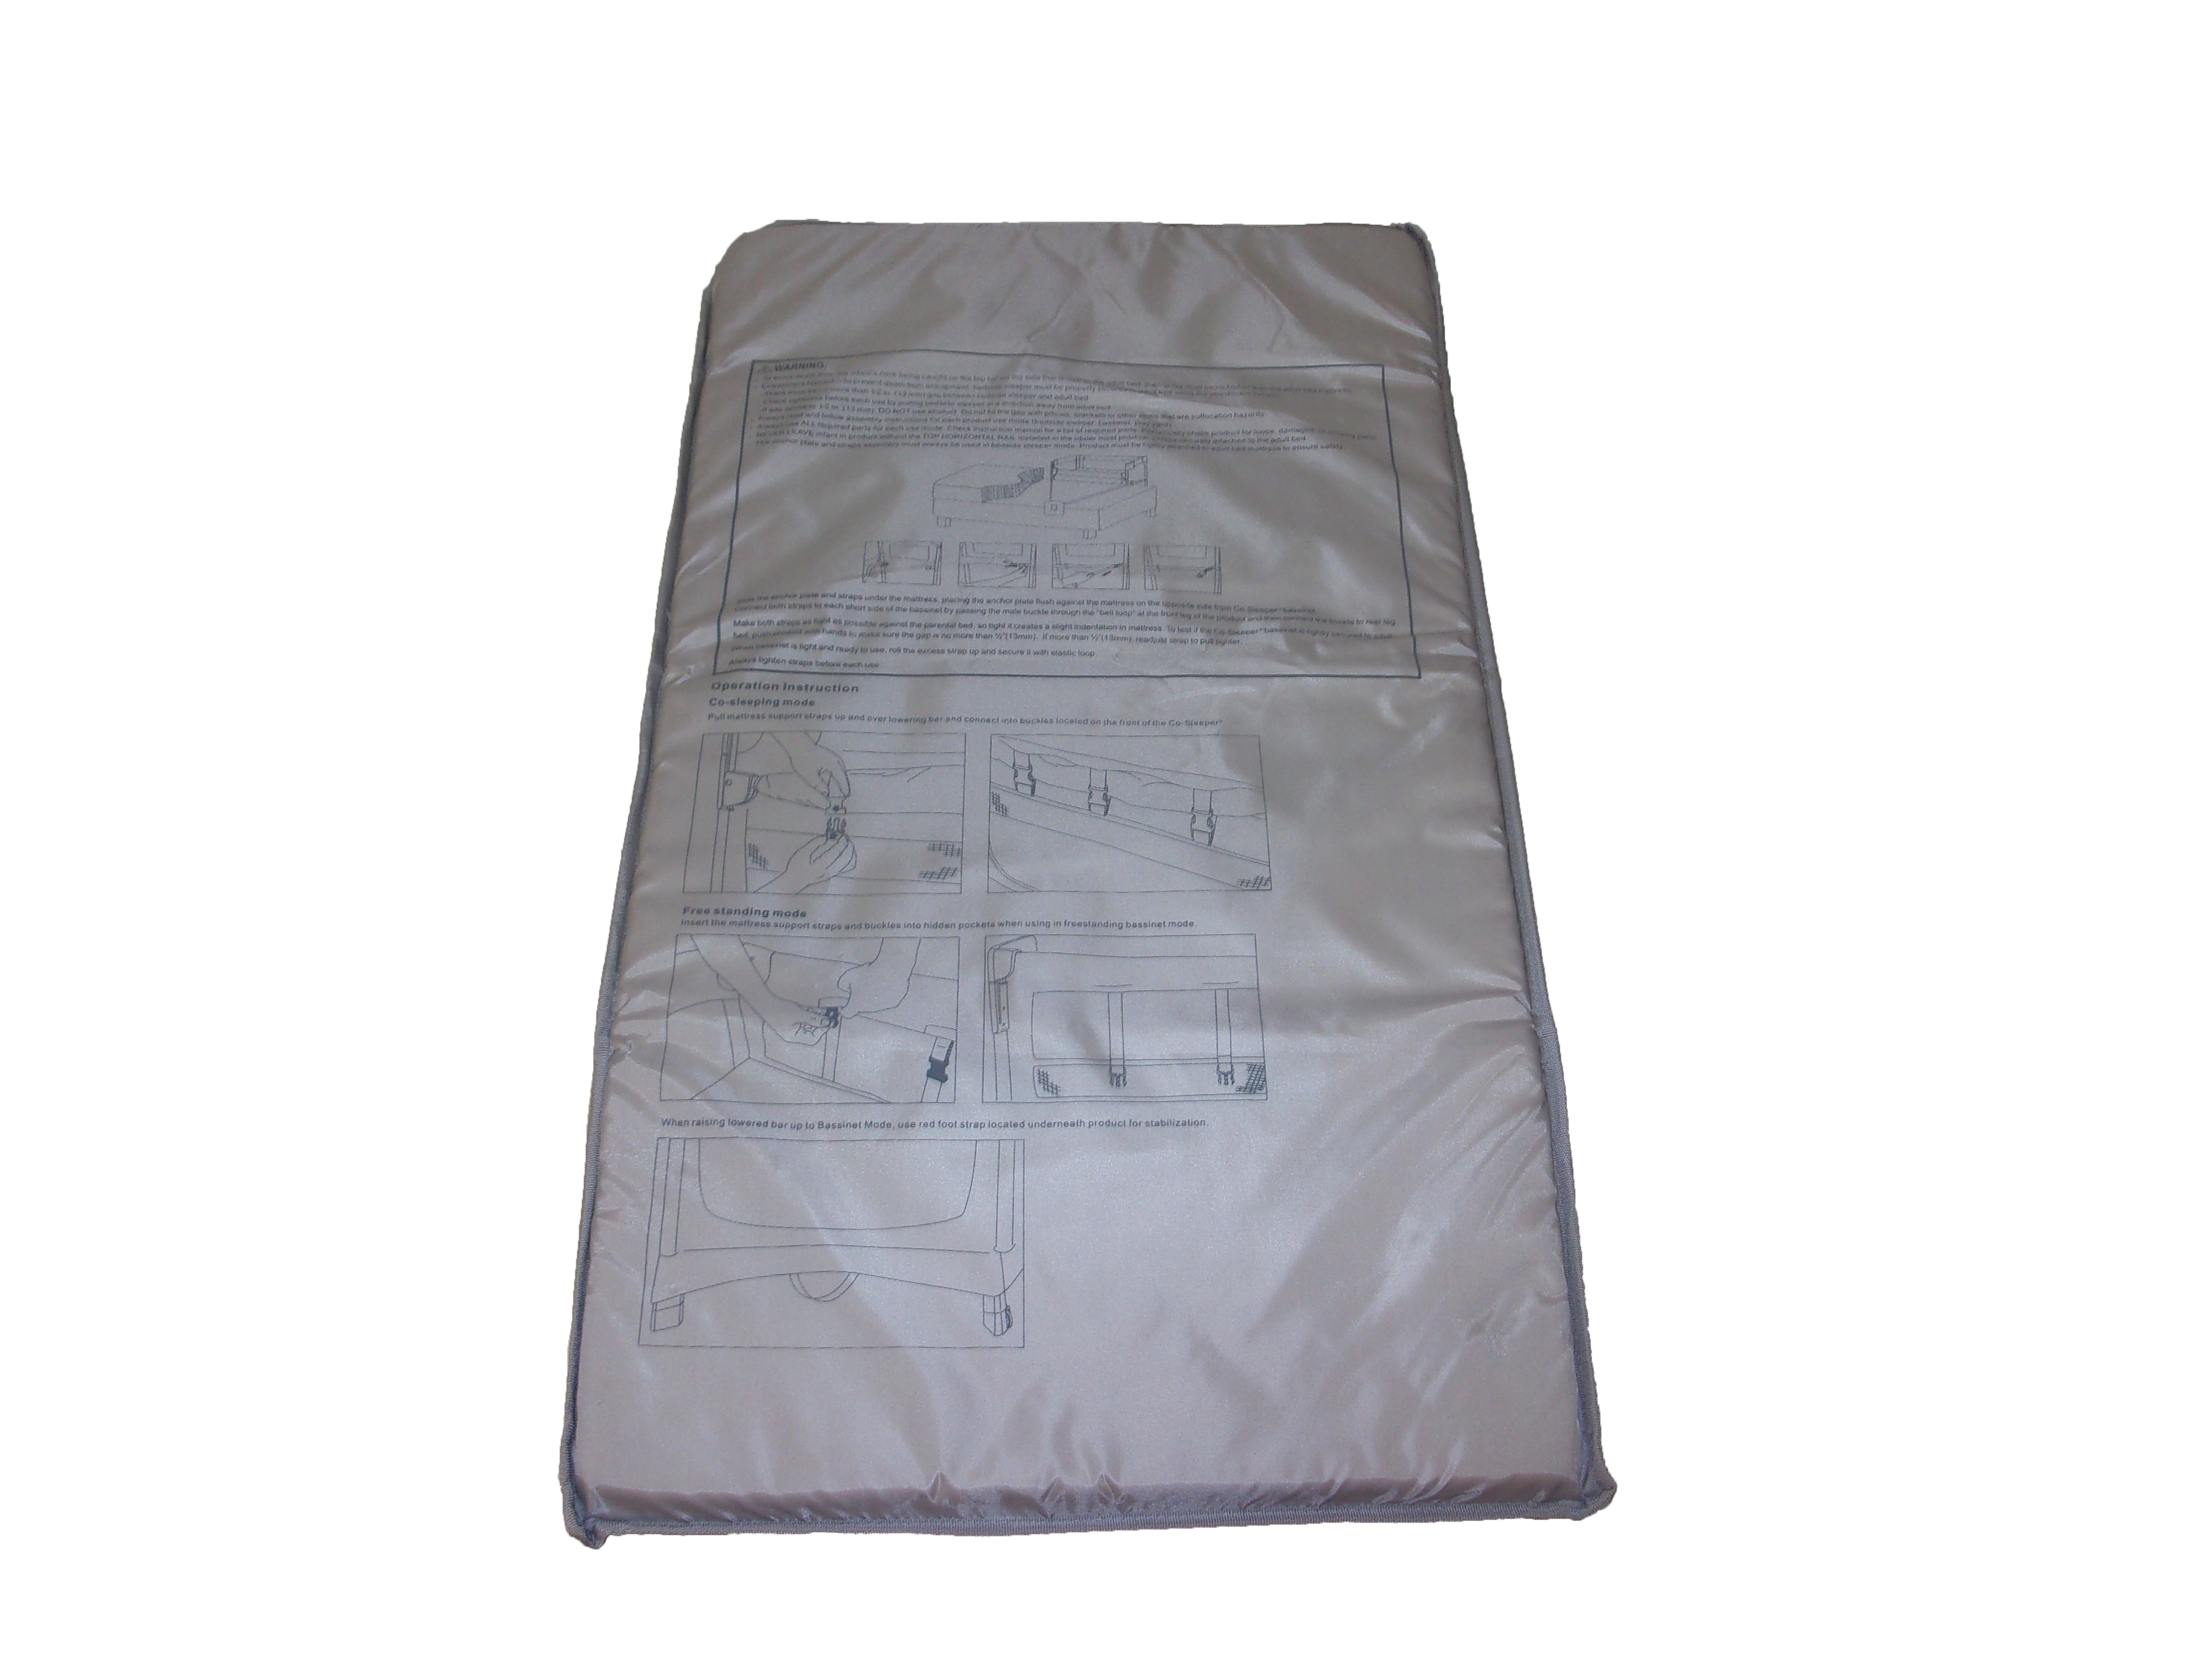 replacement mattress for arm's reach co sleeper